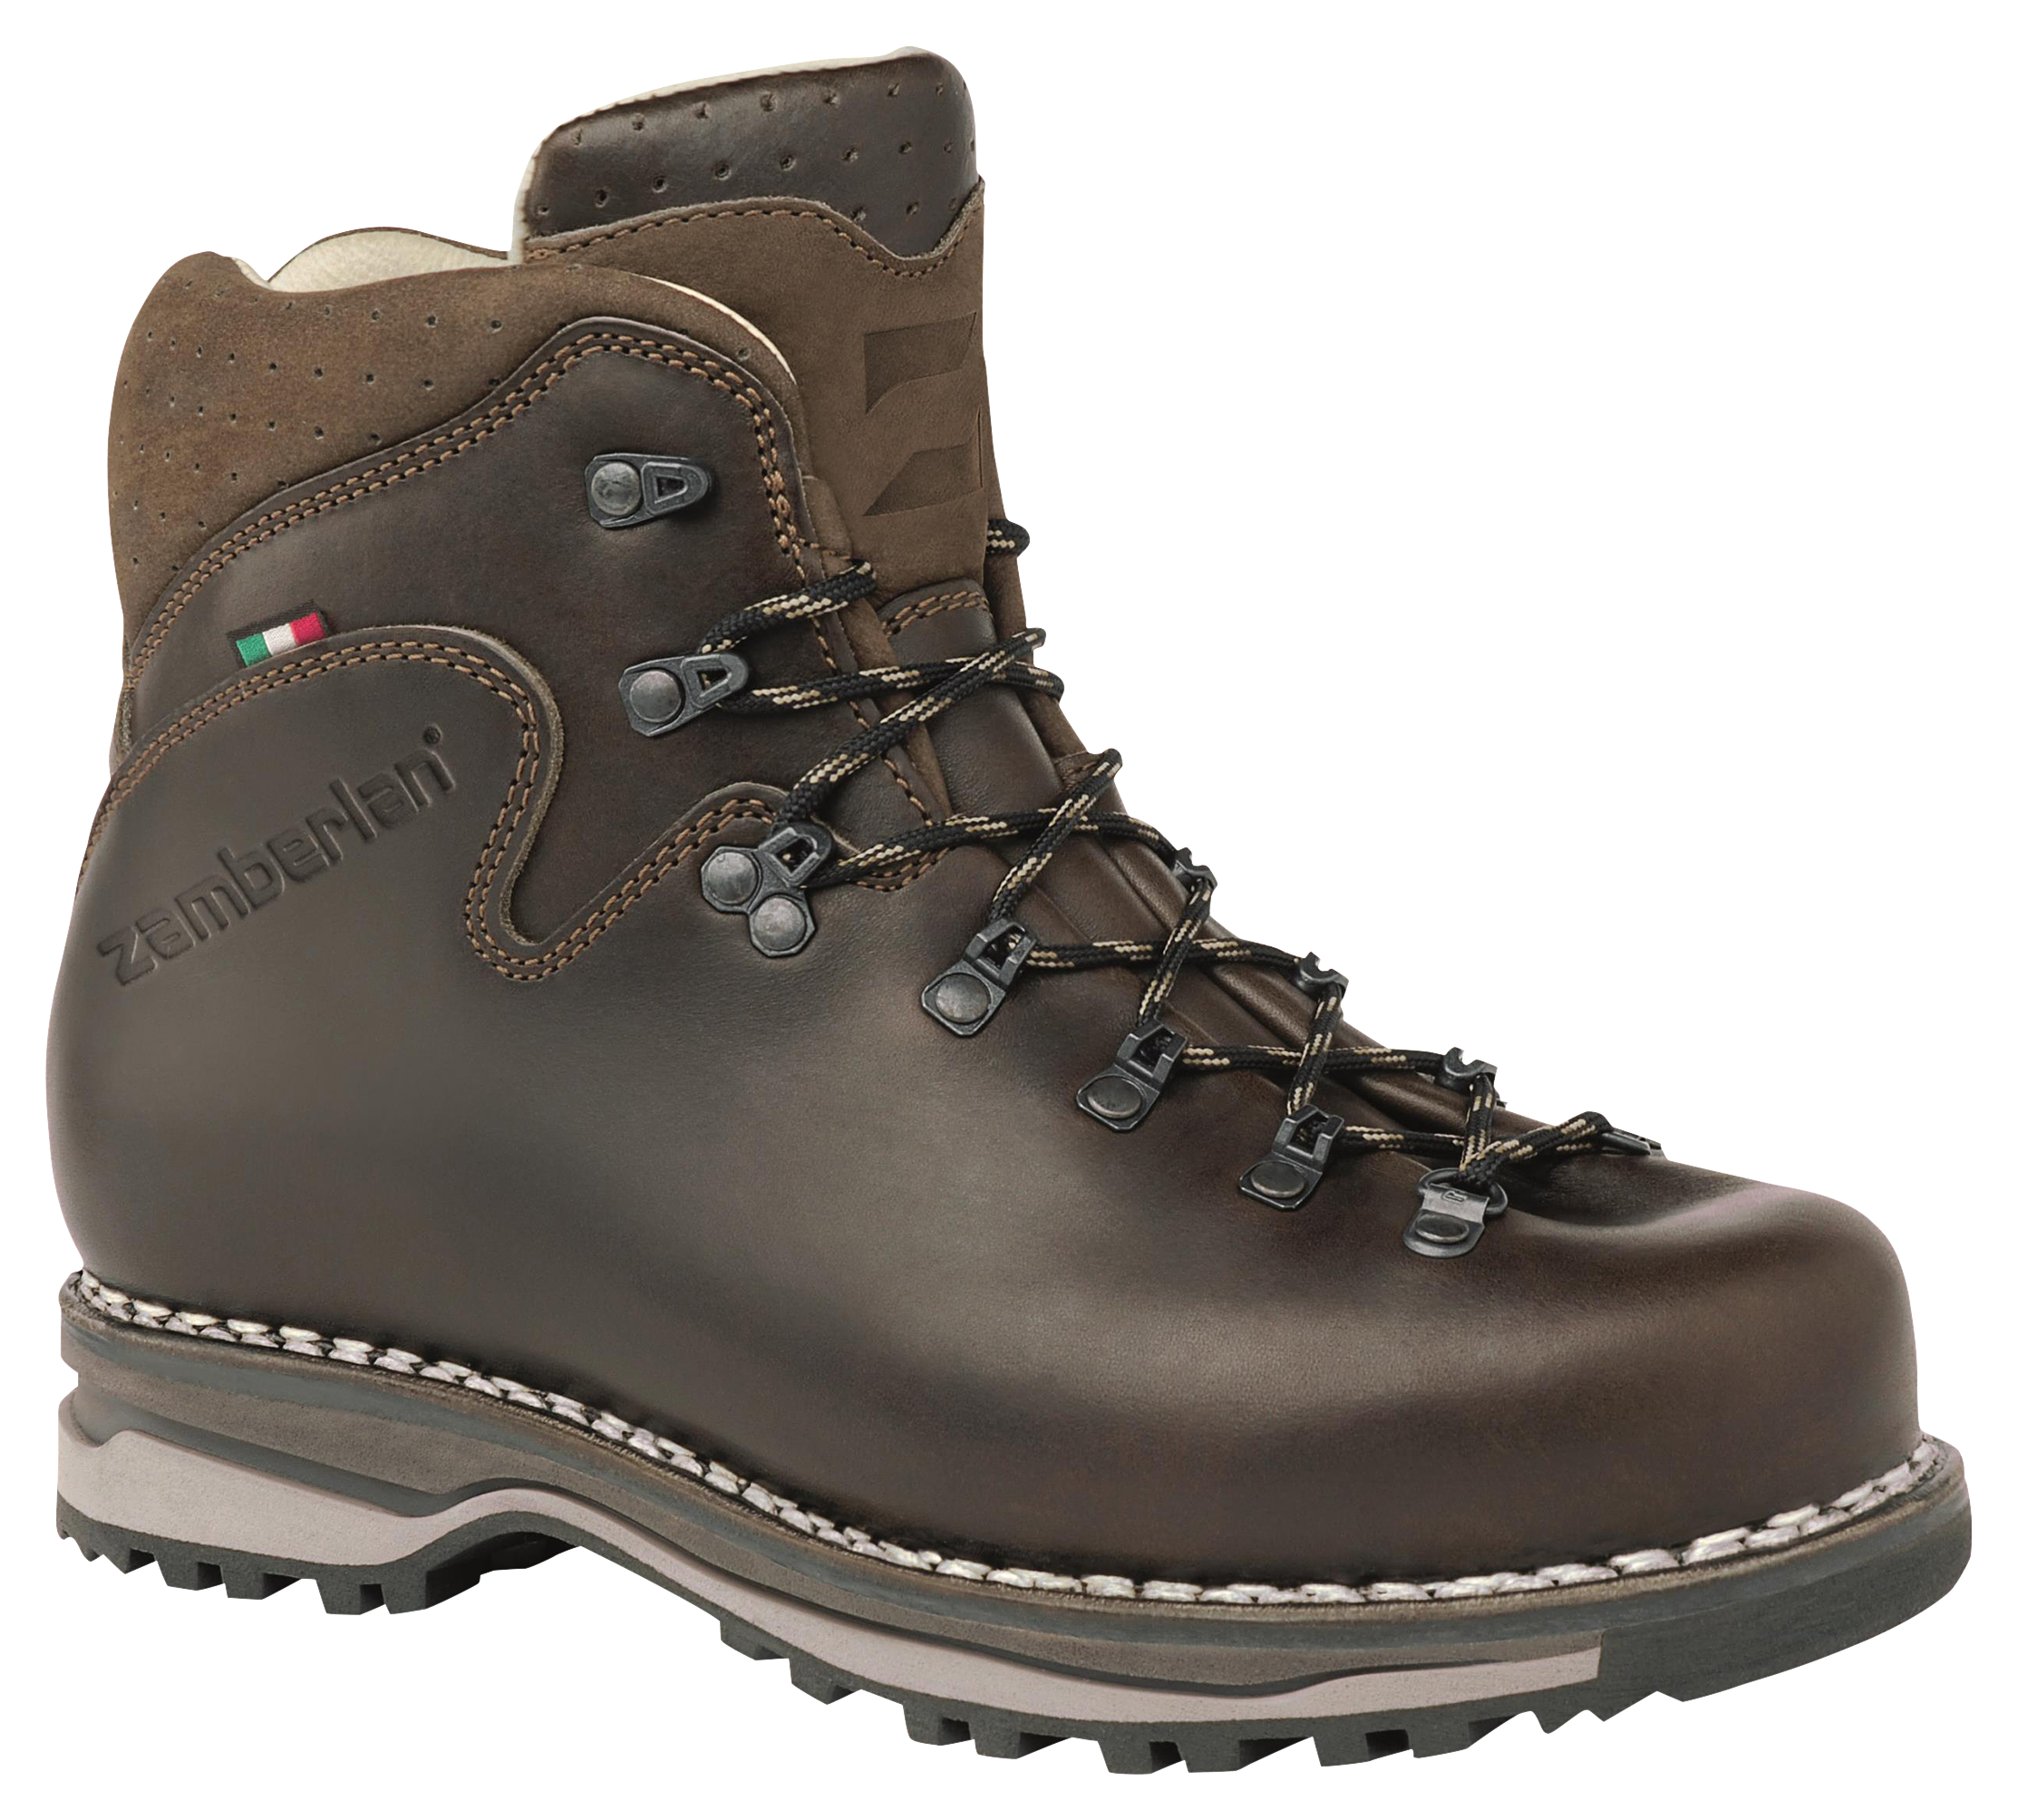 Zamberlan Latemar NW Hiking Boots for Men - Waxed Dark Brown - 8M